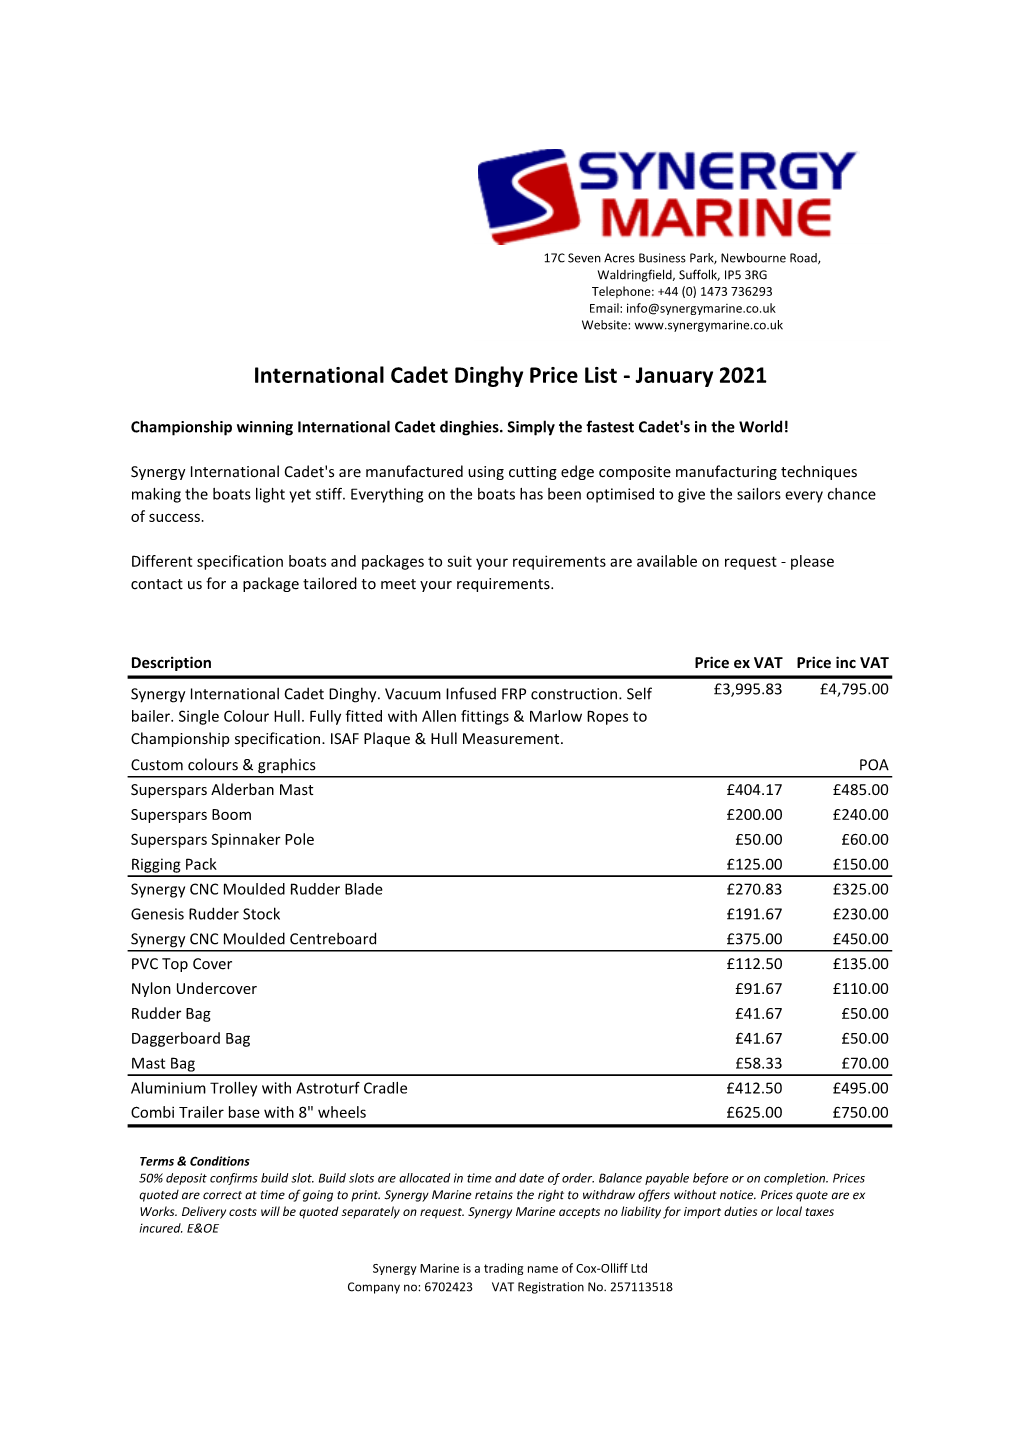 Synergy Marine Cadet Price List January 2021.Xlsx